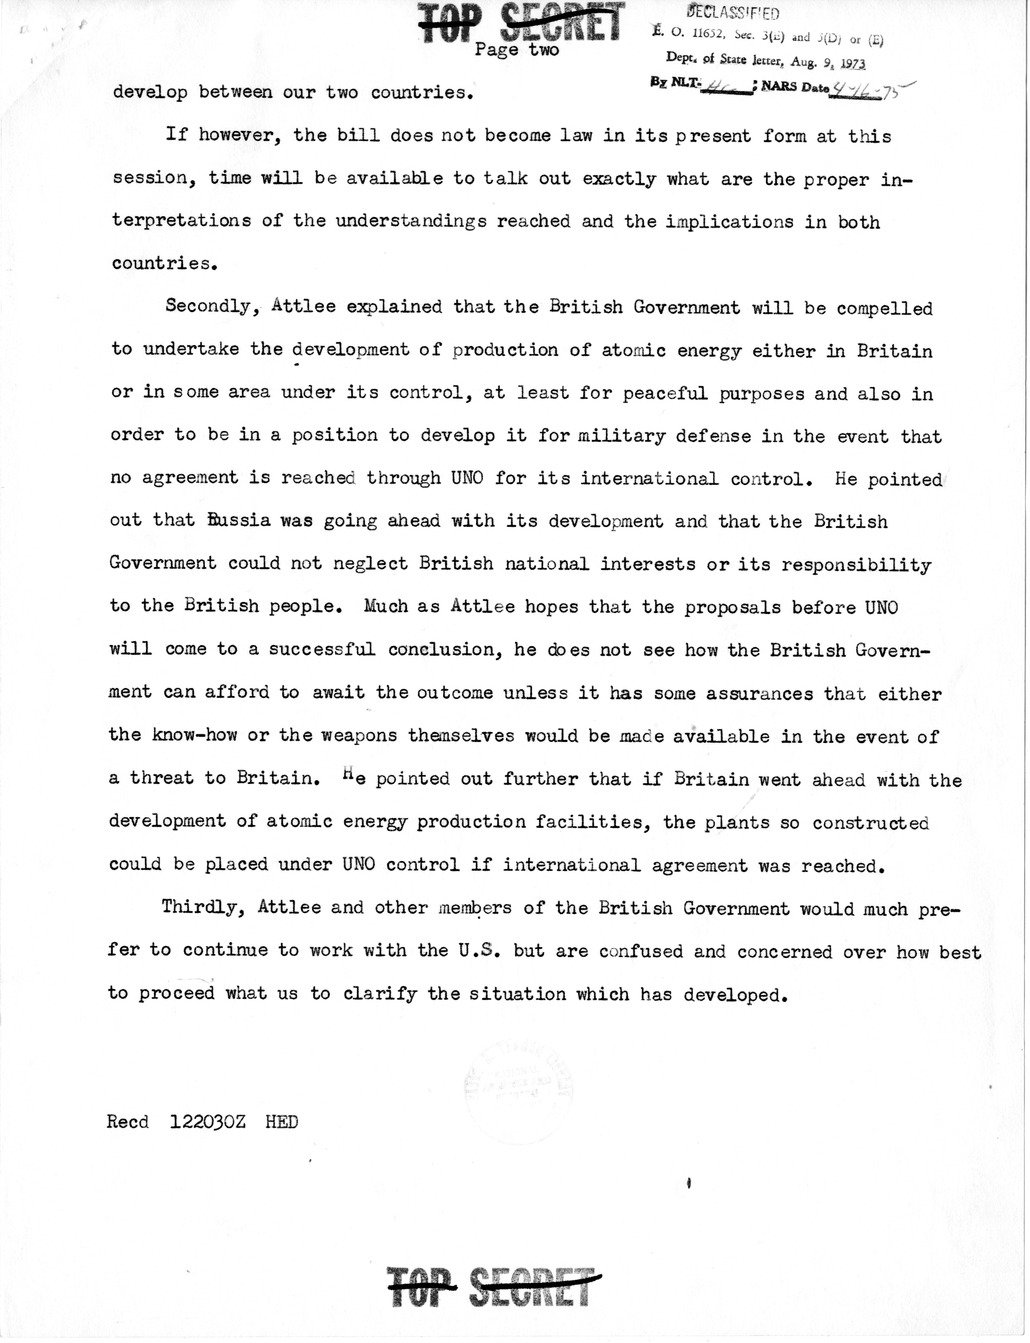 Memorandum from Ambassador Averell Harriman to President Harry S. Truman